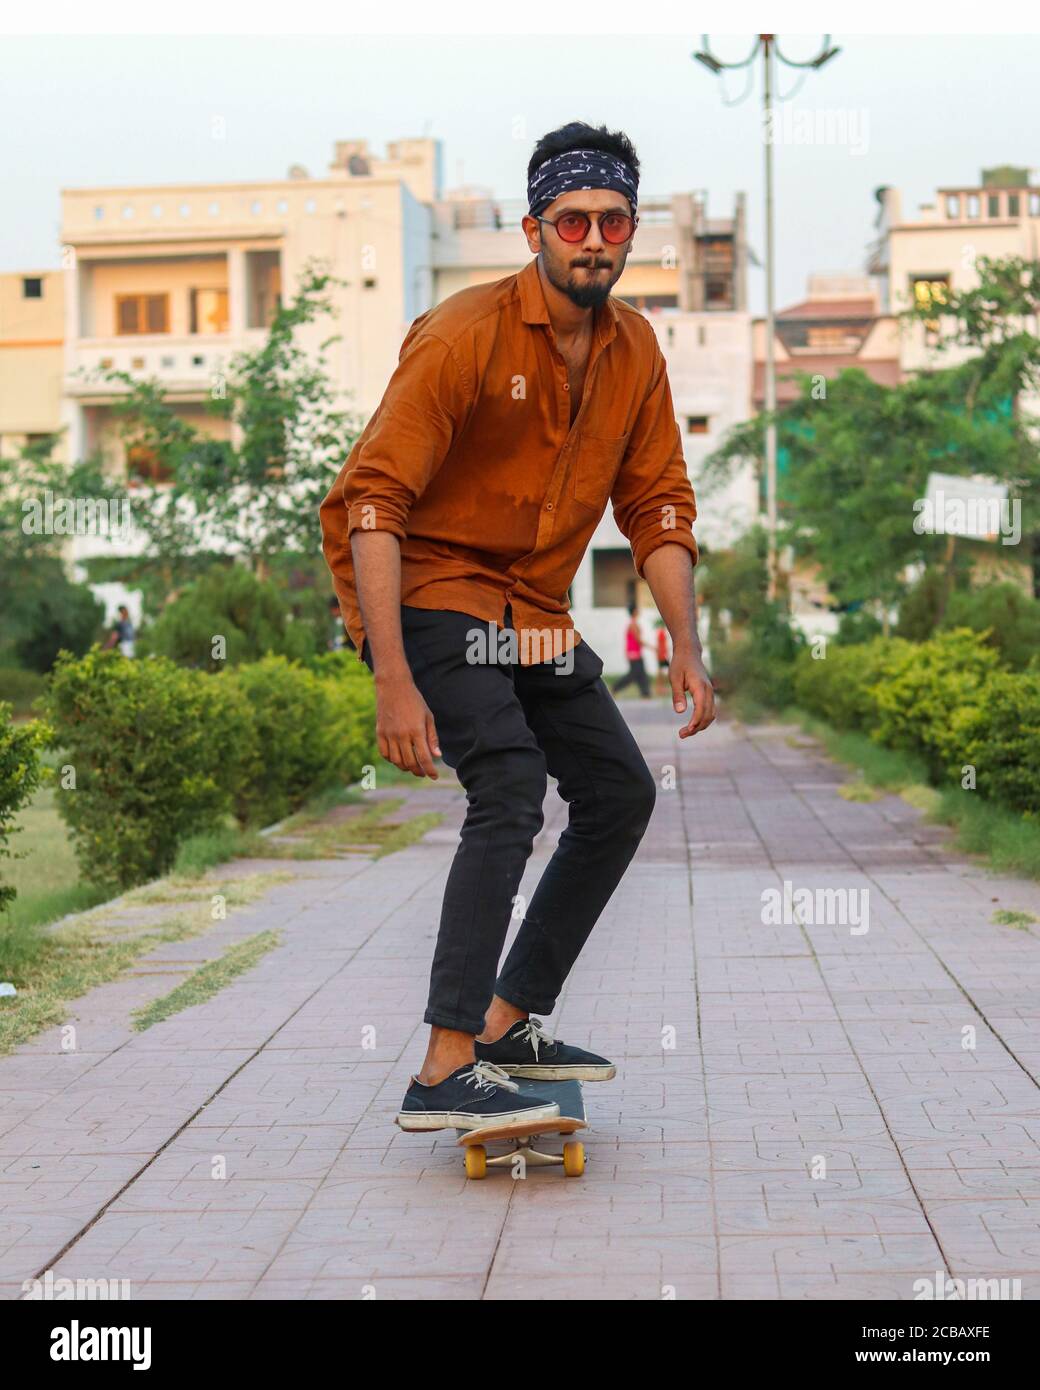 Indian Smart Boy Skate Boarding In Garden Stock Photo